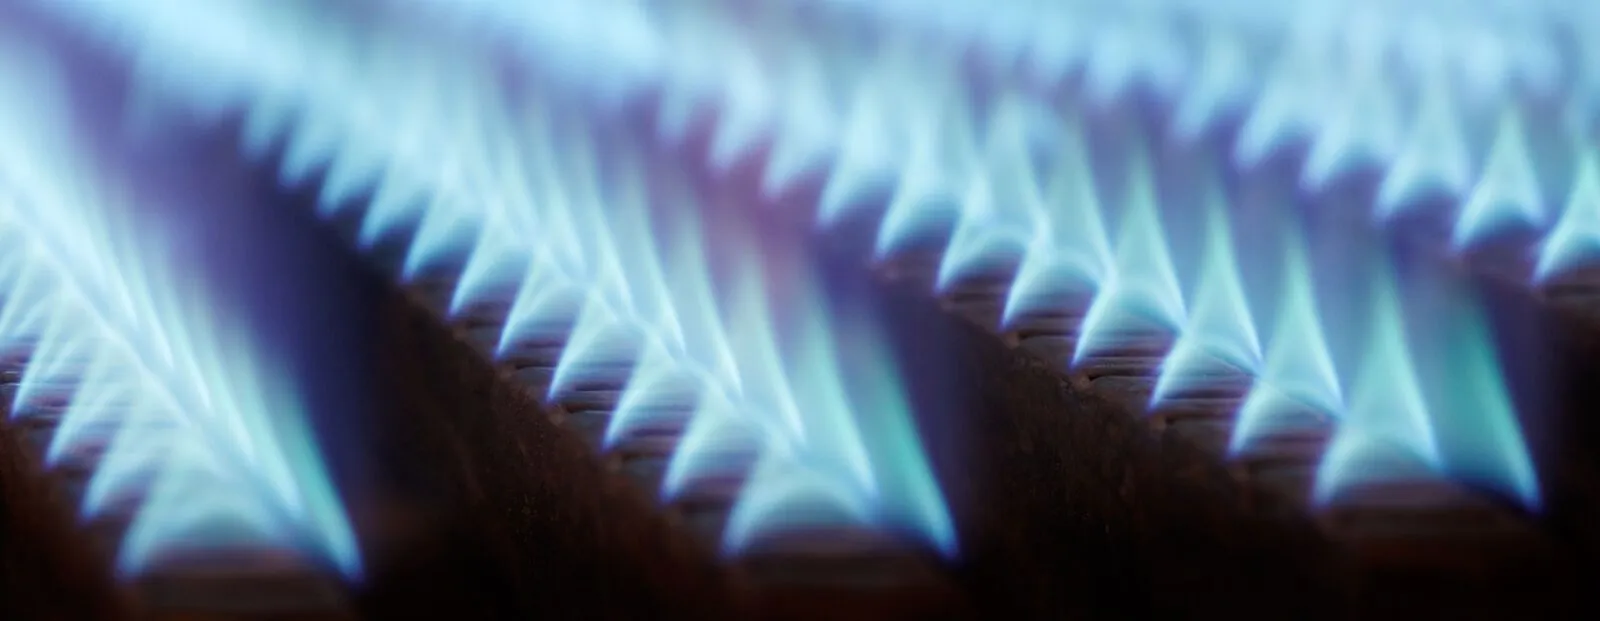 gas flames in a boiler 01.jpg